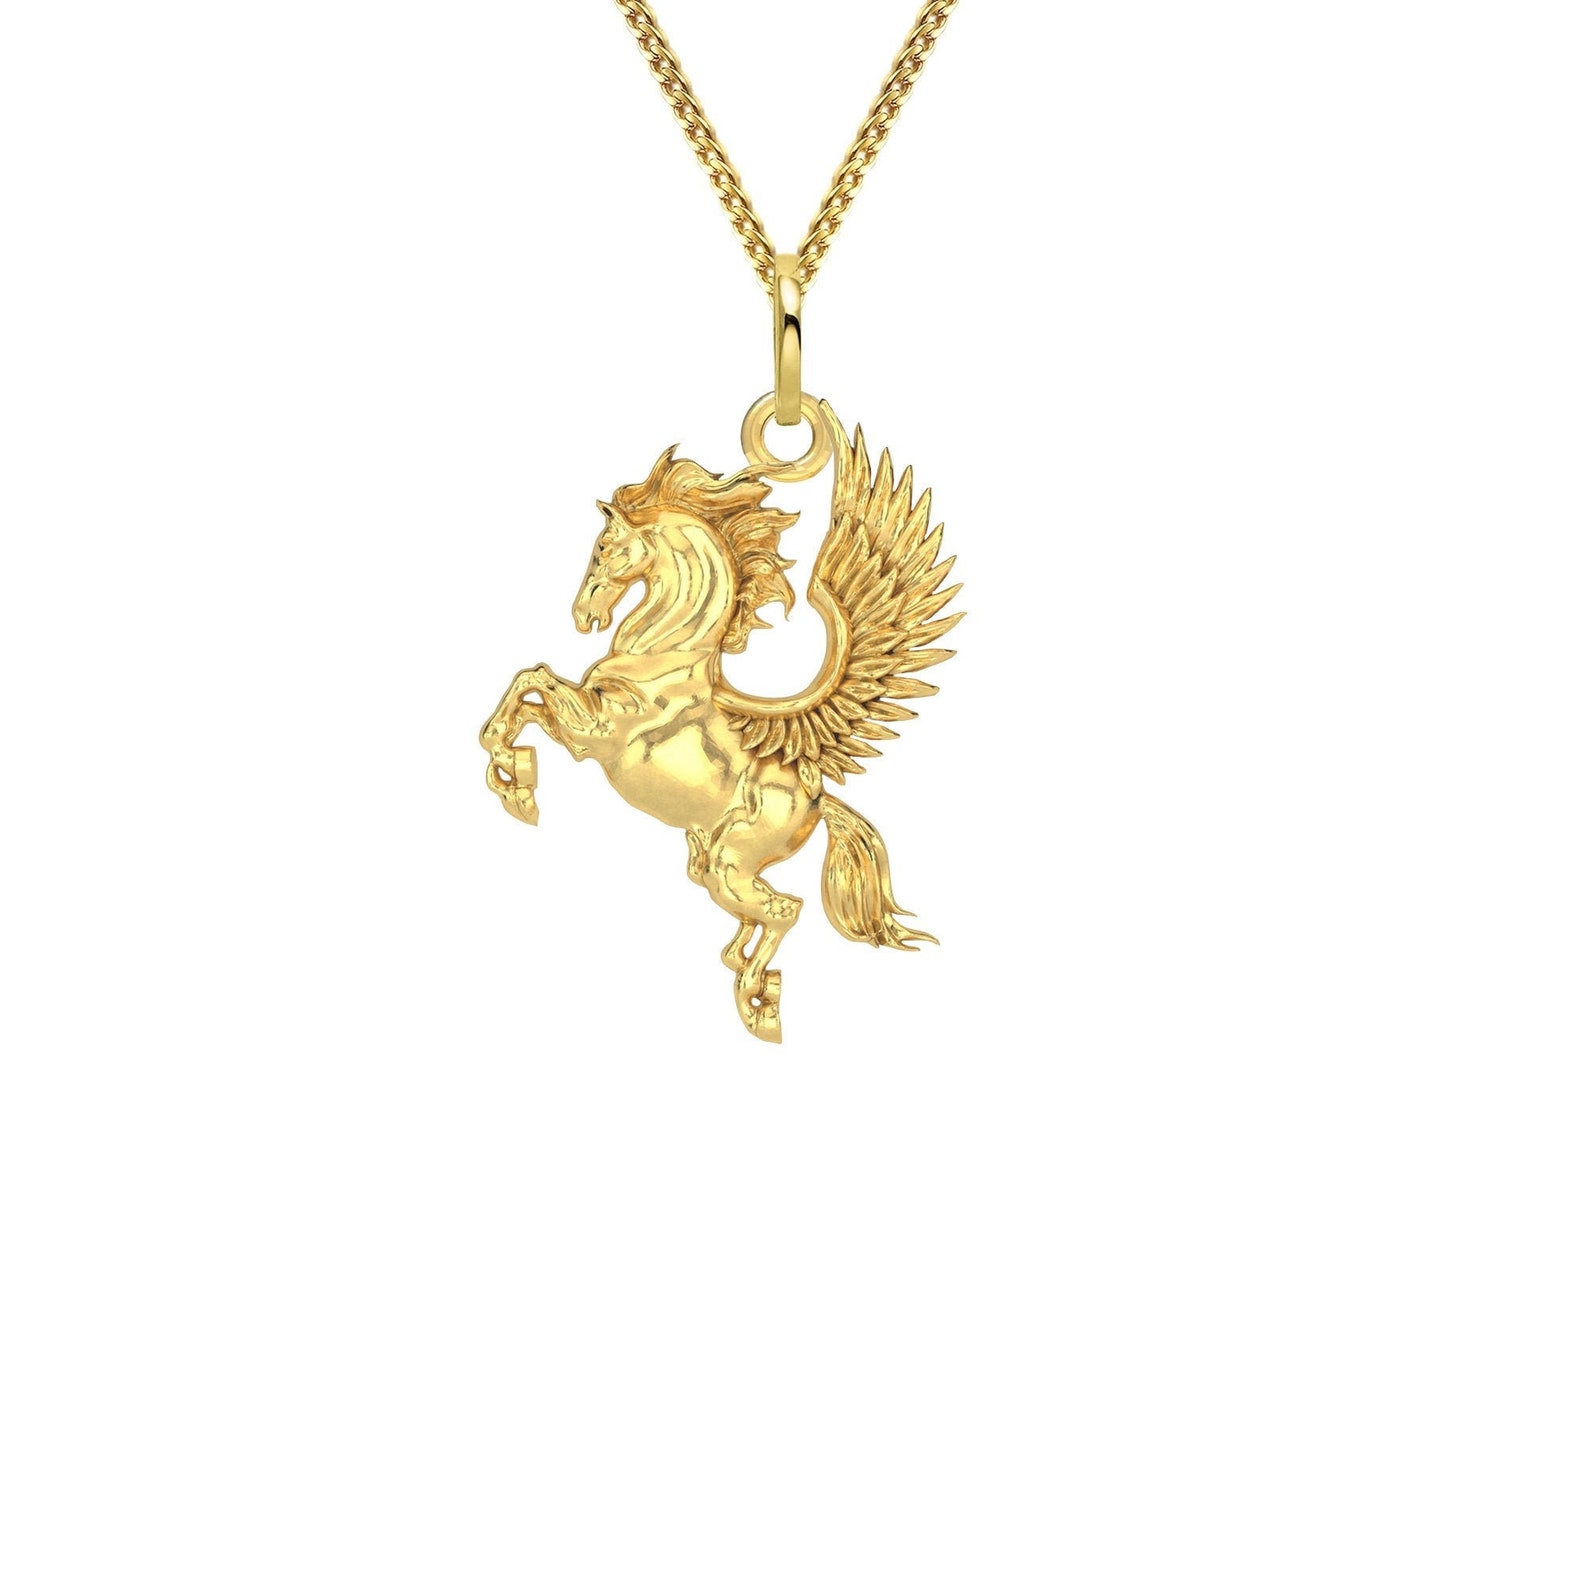 Mini Pegasus Pendant 18k Solid Gold Pegasus Necklace Winged Etsy